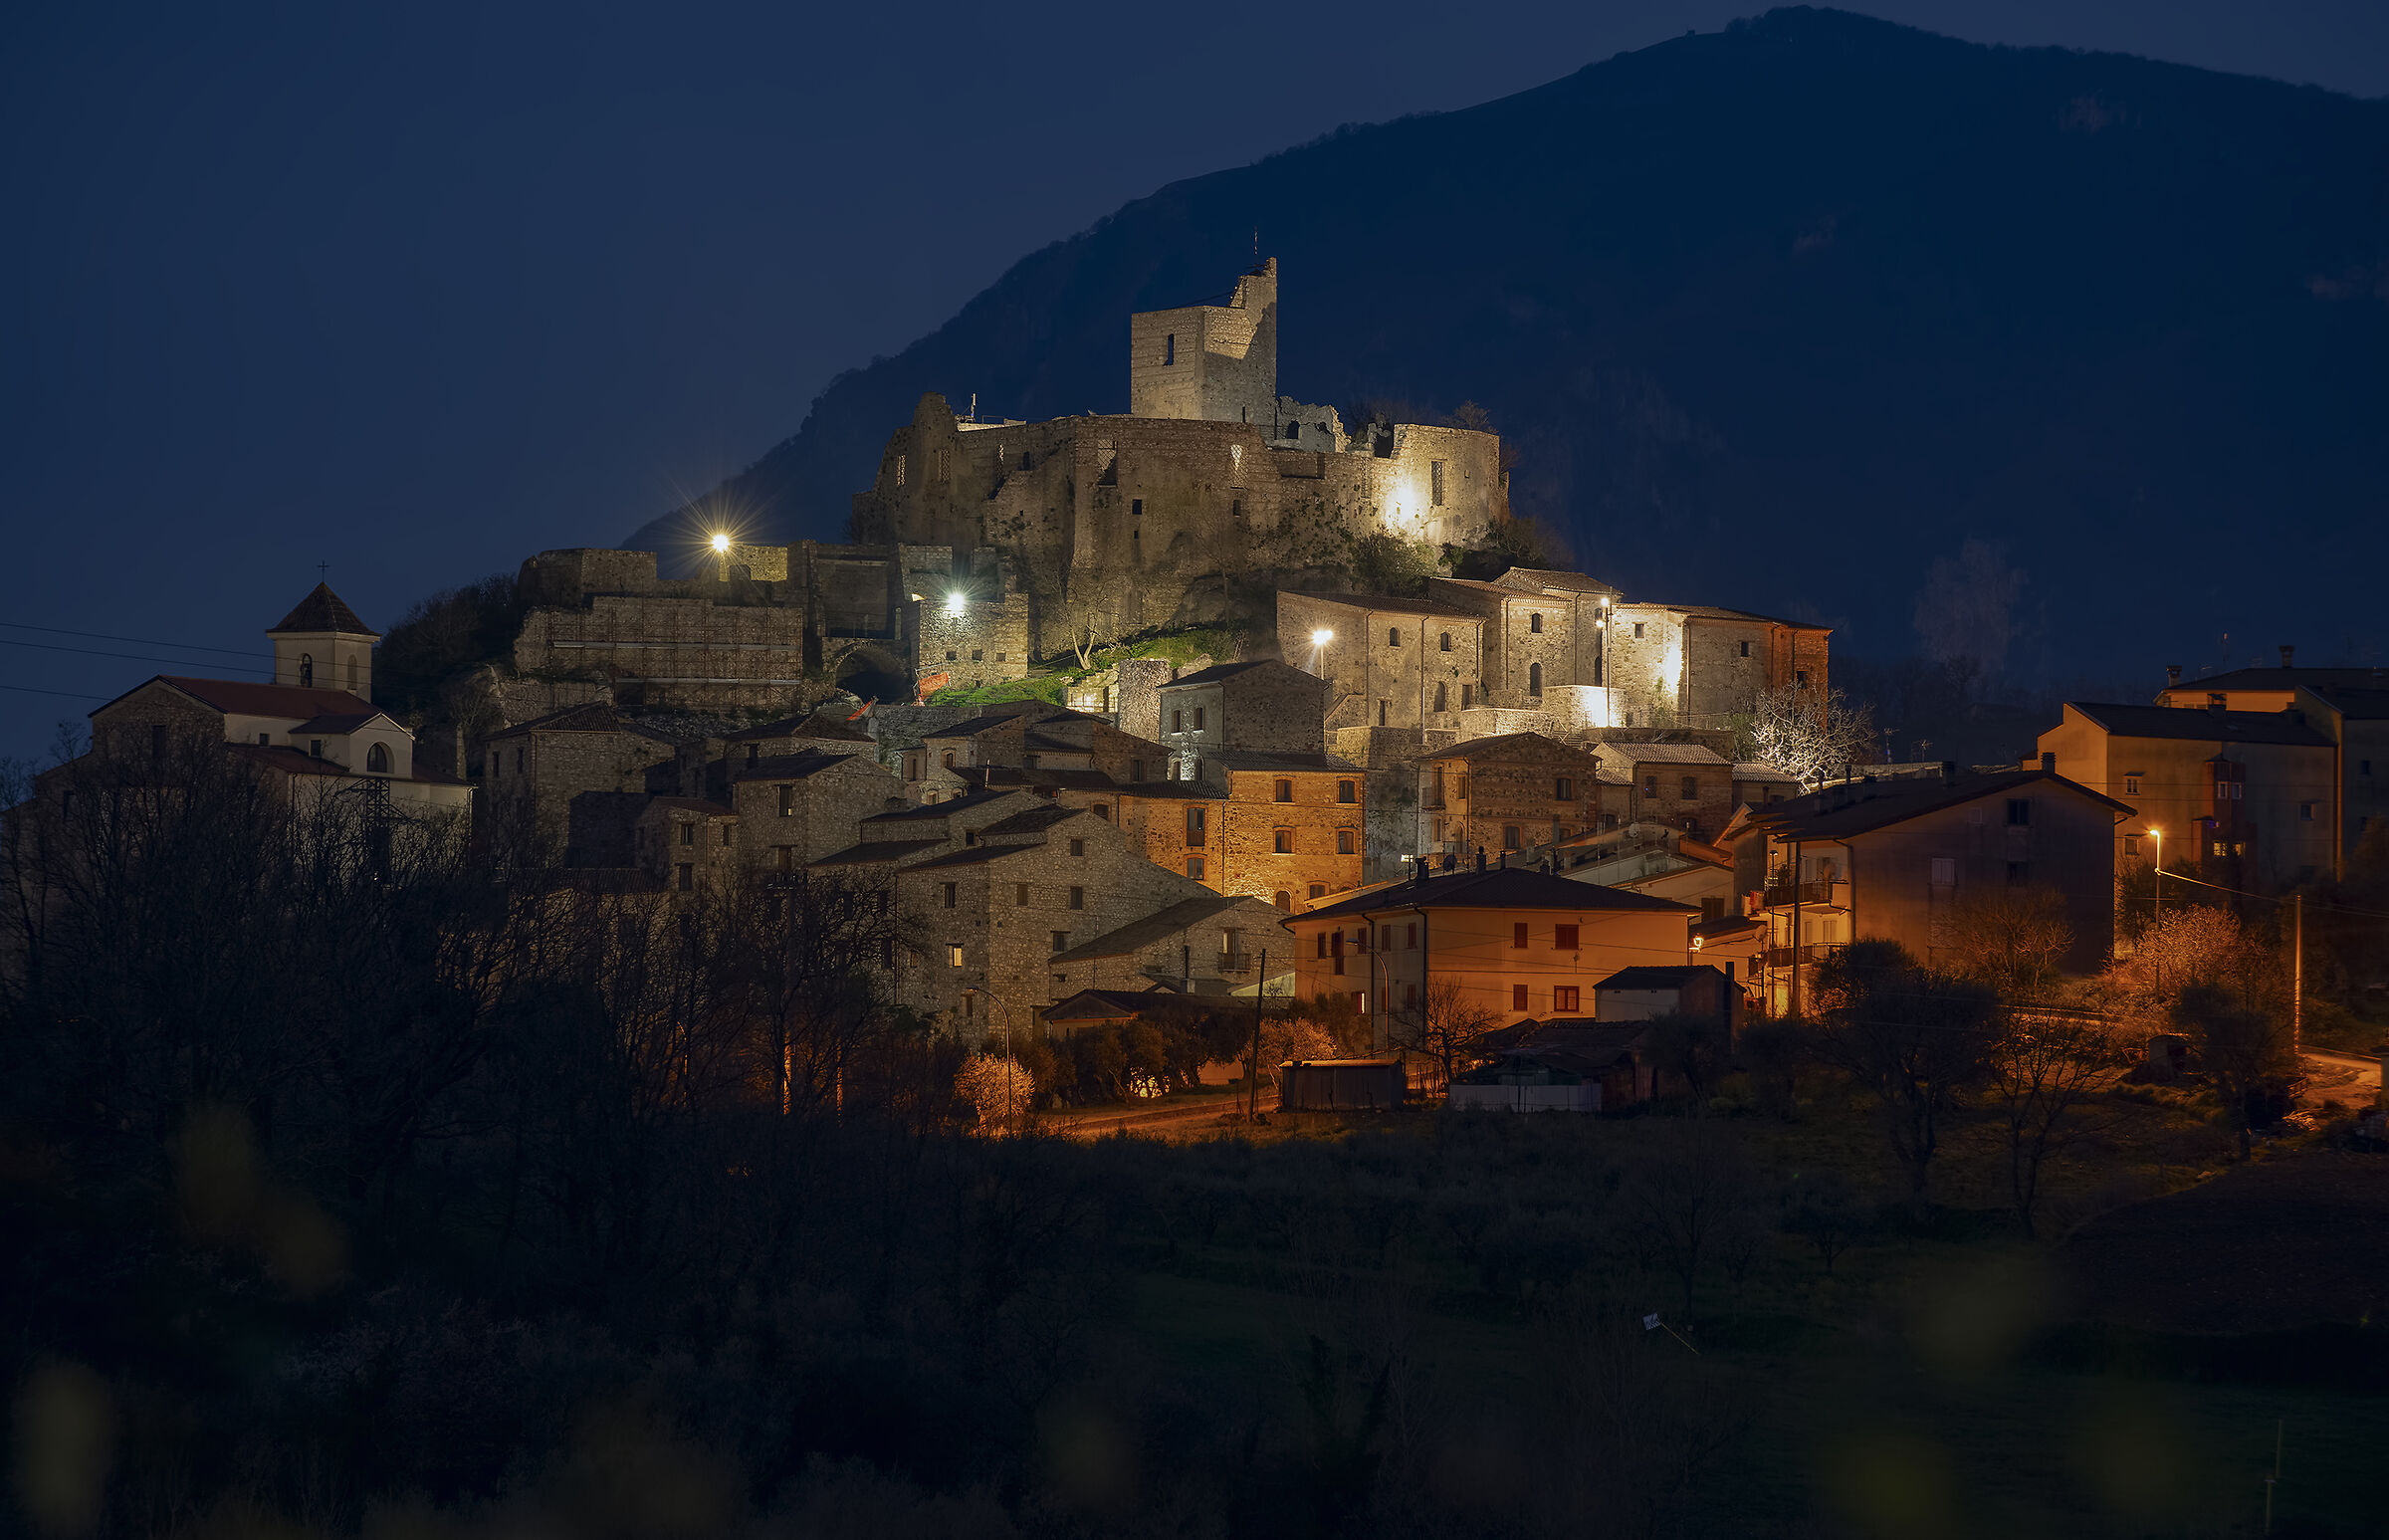 Quaglietta, an ancient village...